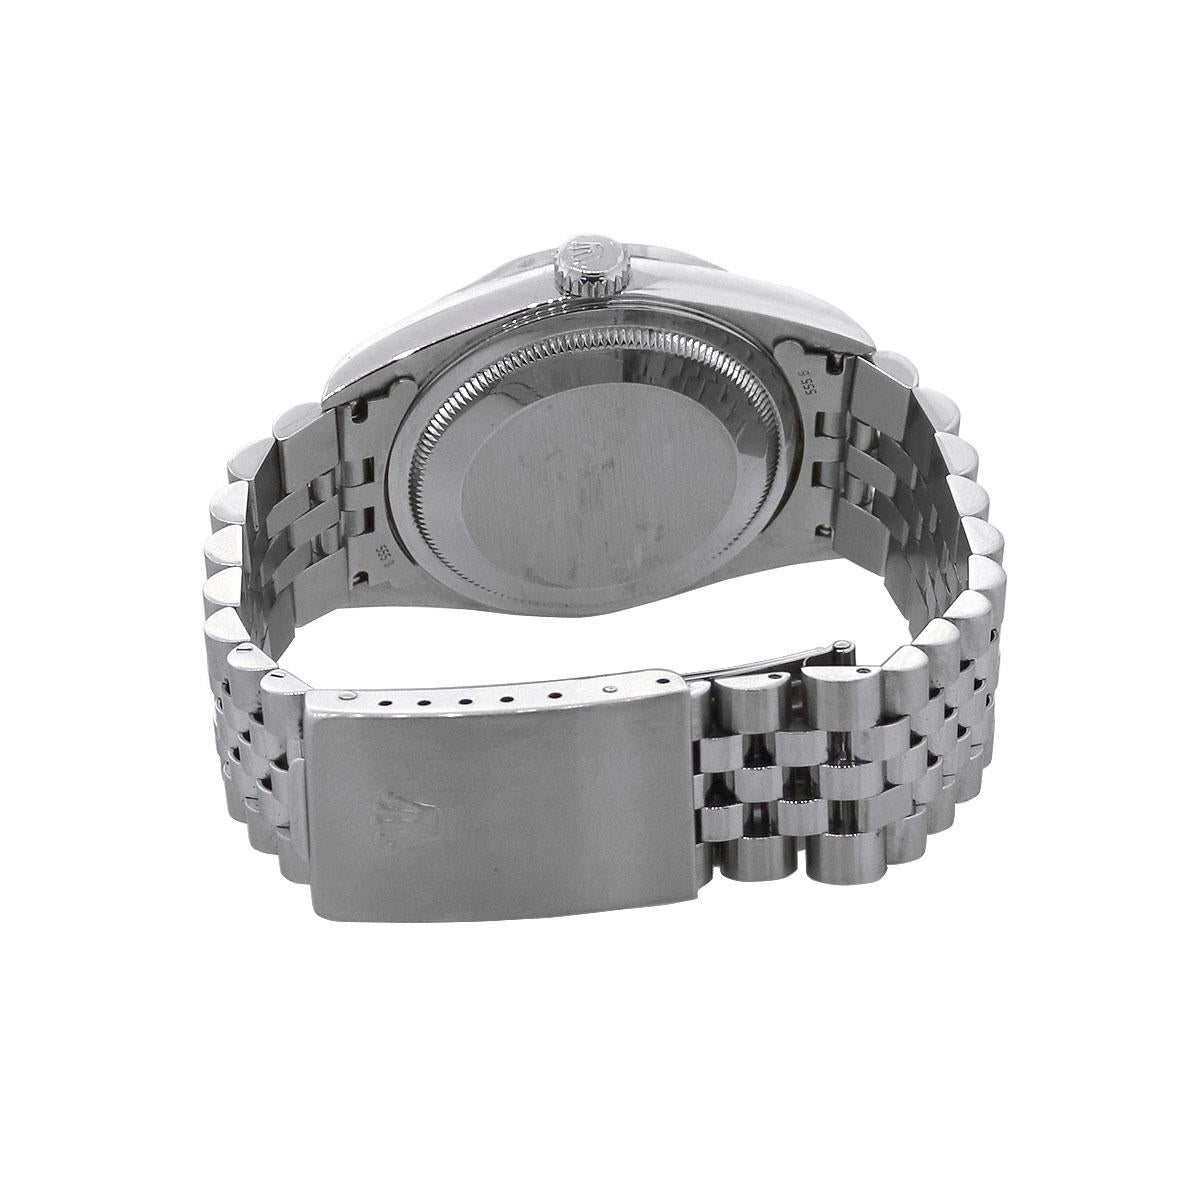 Round Cut Rolex 16234 Datejust Stainless Steel White Roman Dial Watch